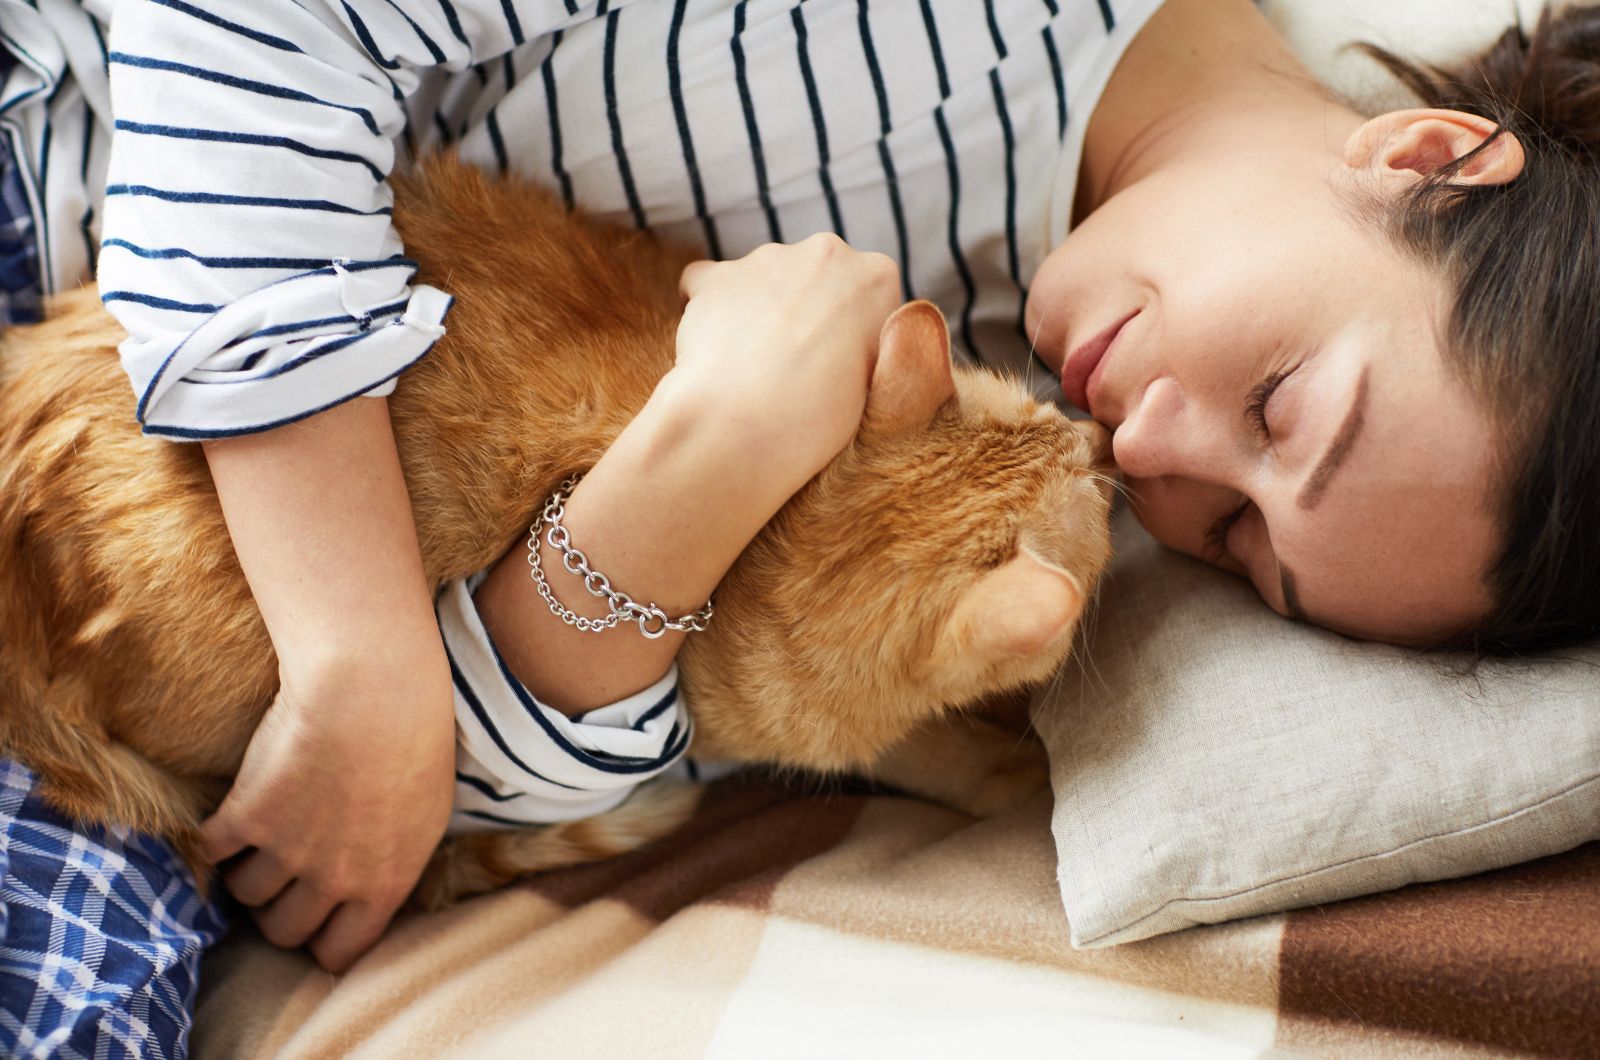 woman cuddling a cat